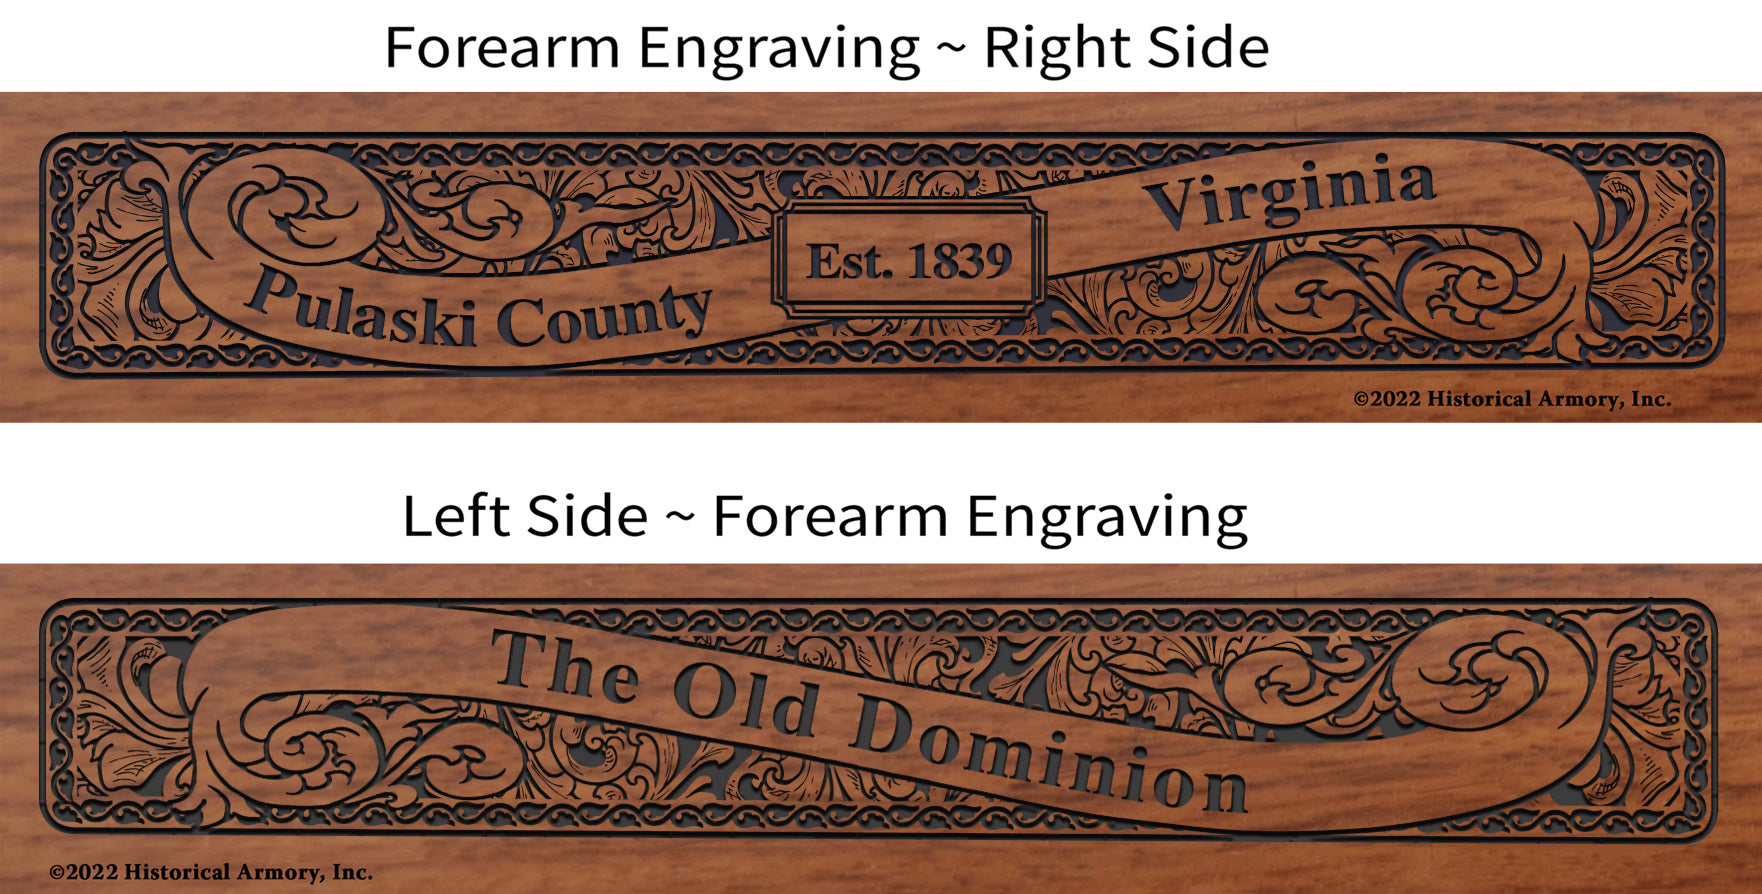 Pulaski County Virginia Engraved Rifle Forearm